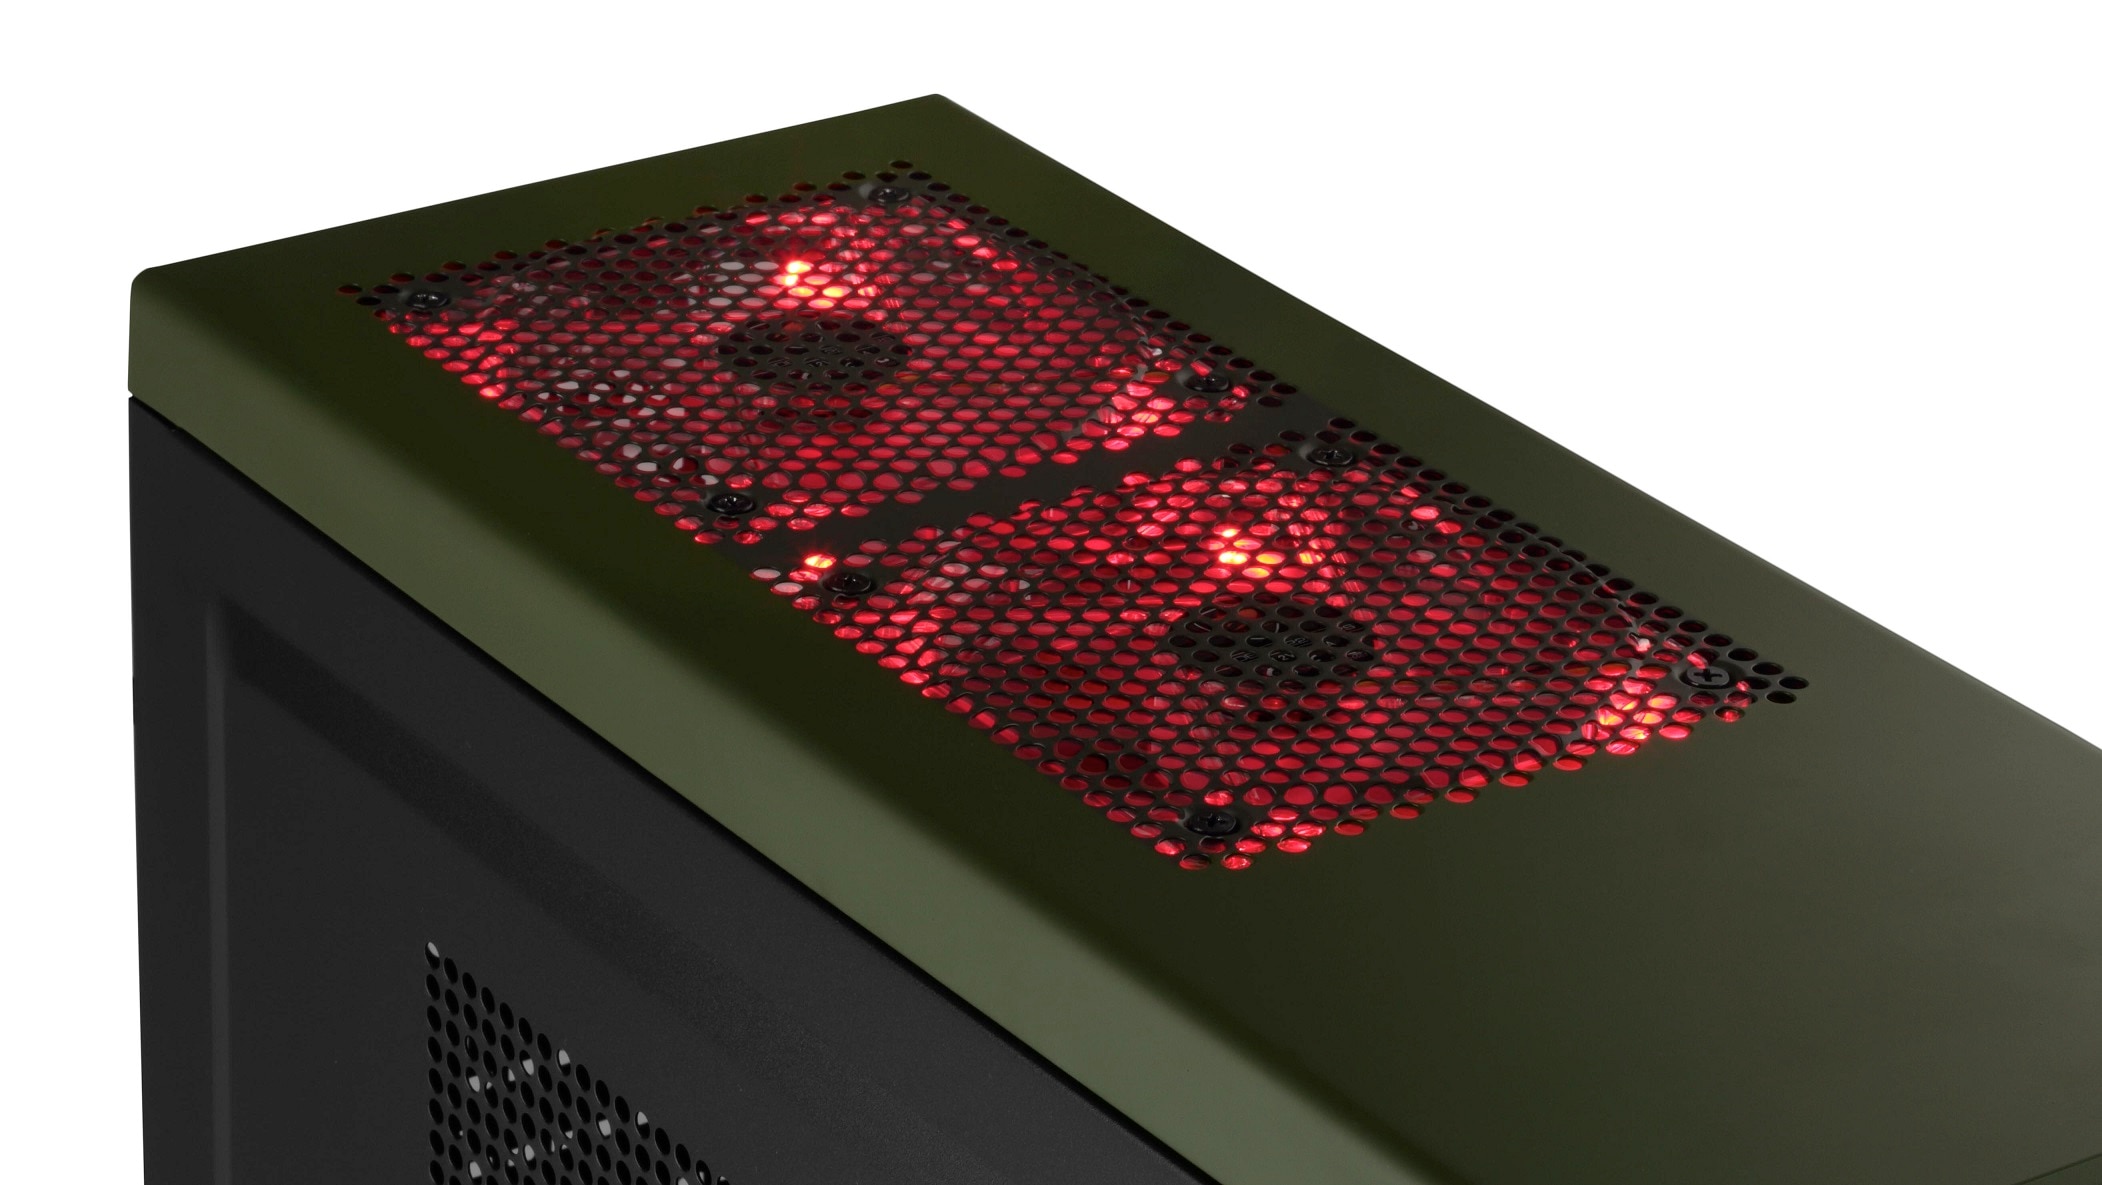 Hyrican Gaming-PC-Komplettsystem »Military SET02153«, inklusive 27" Monitor MSI Optix G271